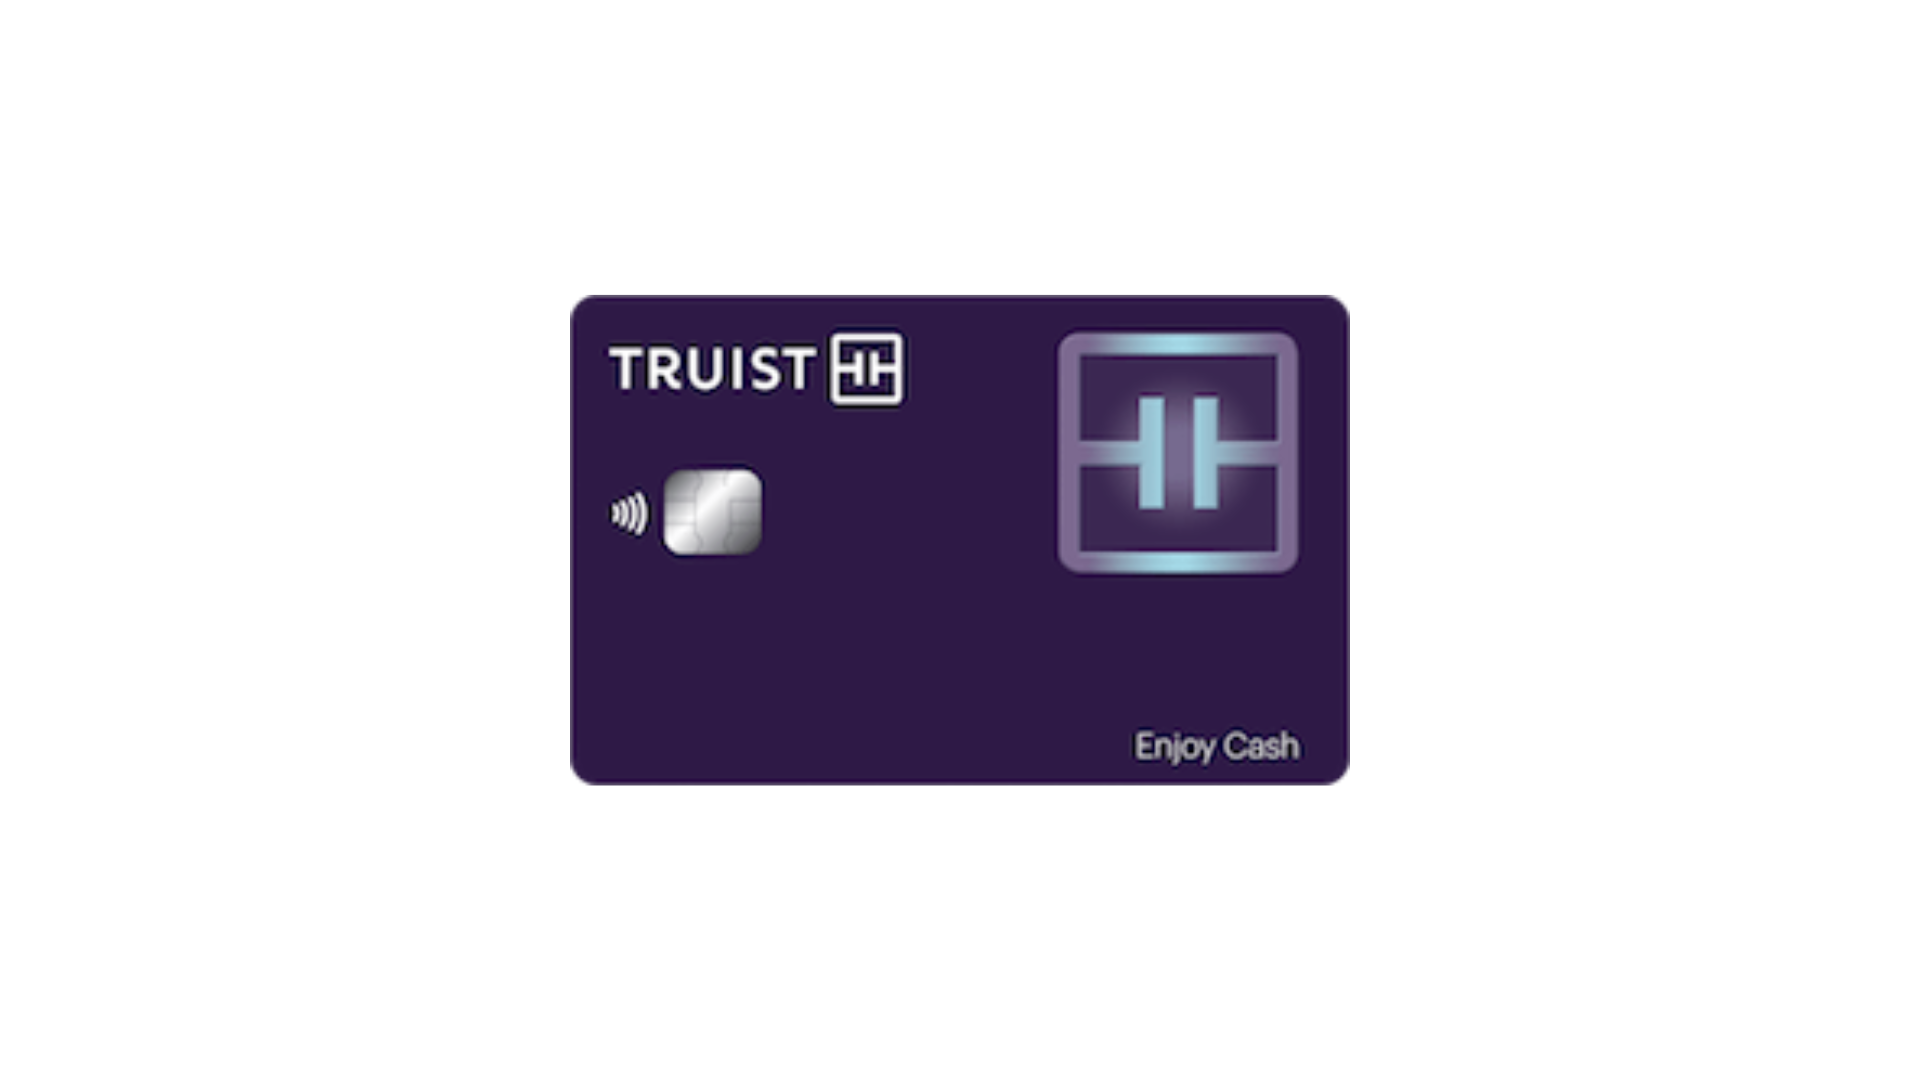 Truist Enjoy Cash Credit Card